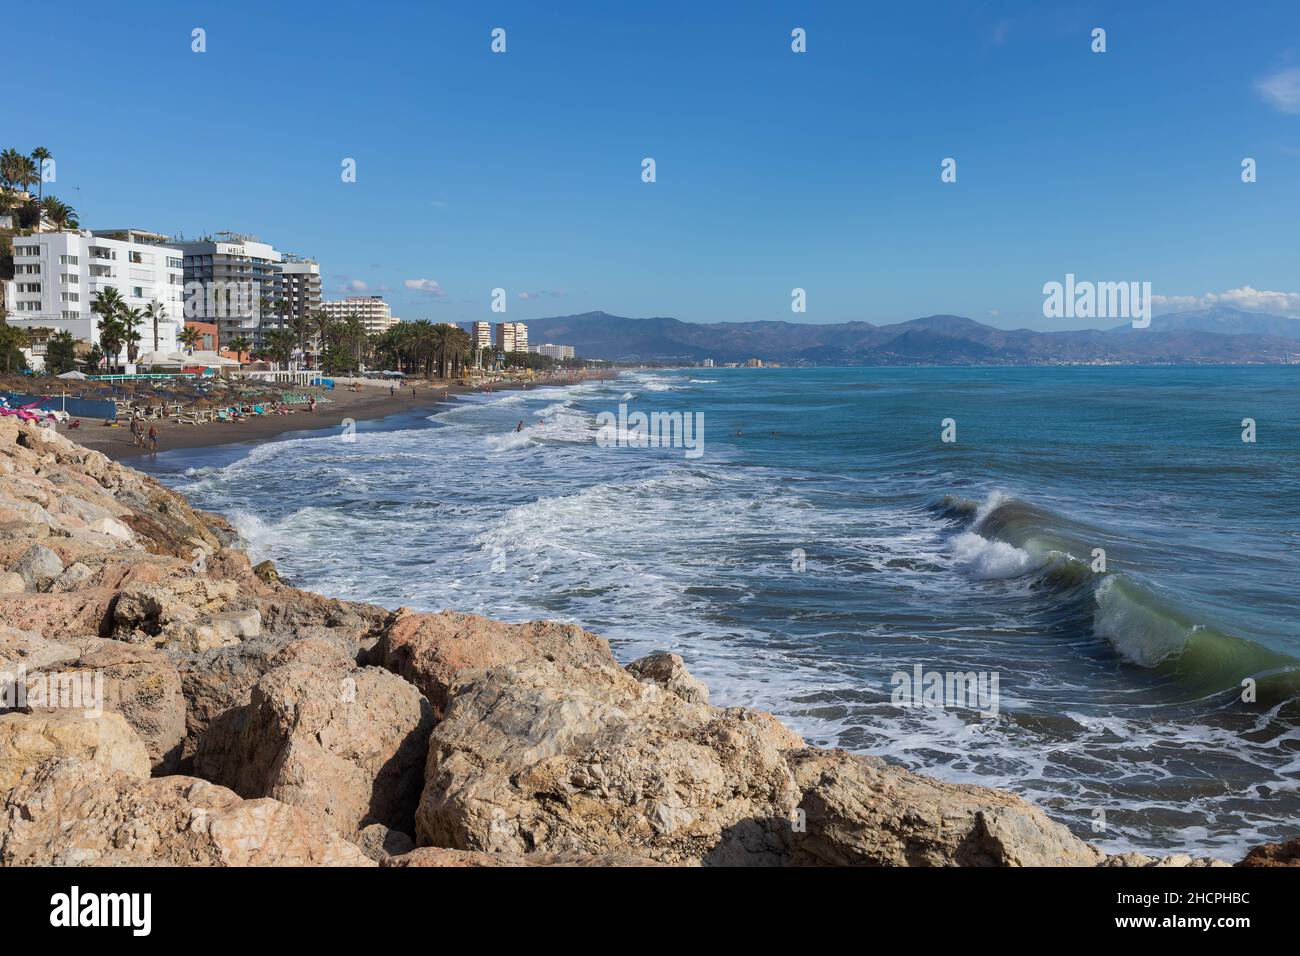 View at Bajondillo Beach, Torremolinos, Costa del sol, Spain Stock Photo